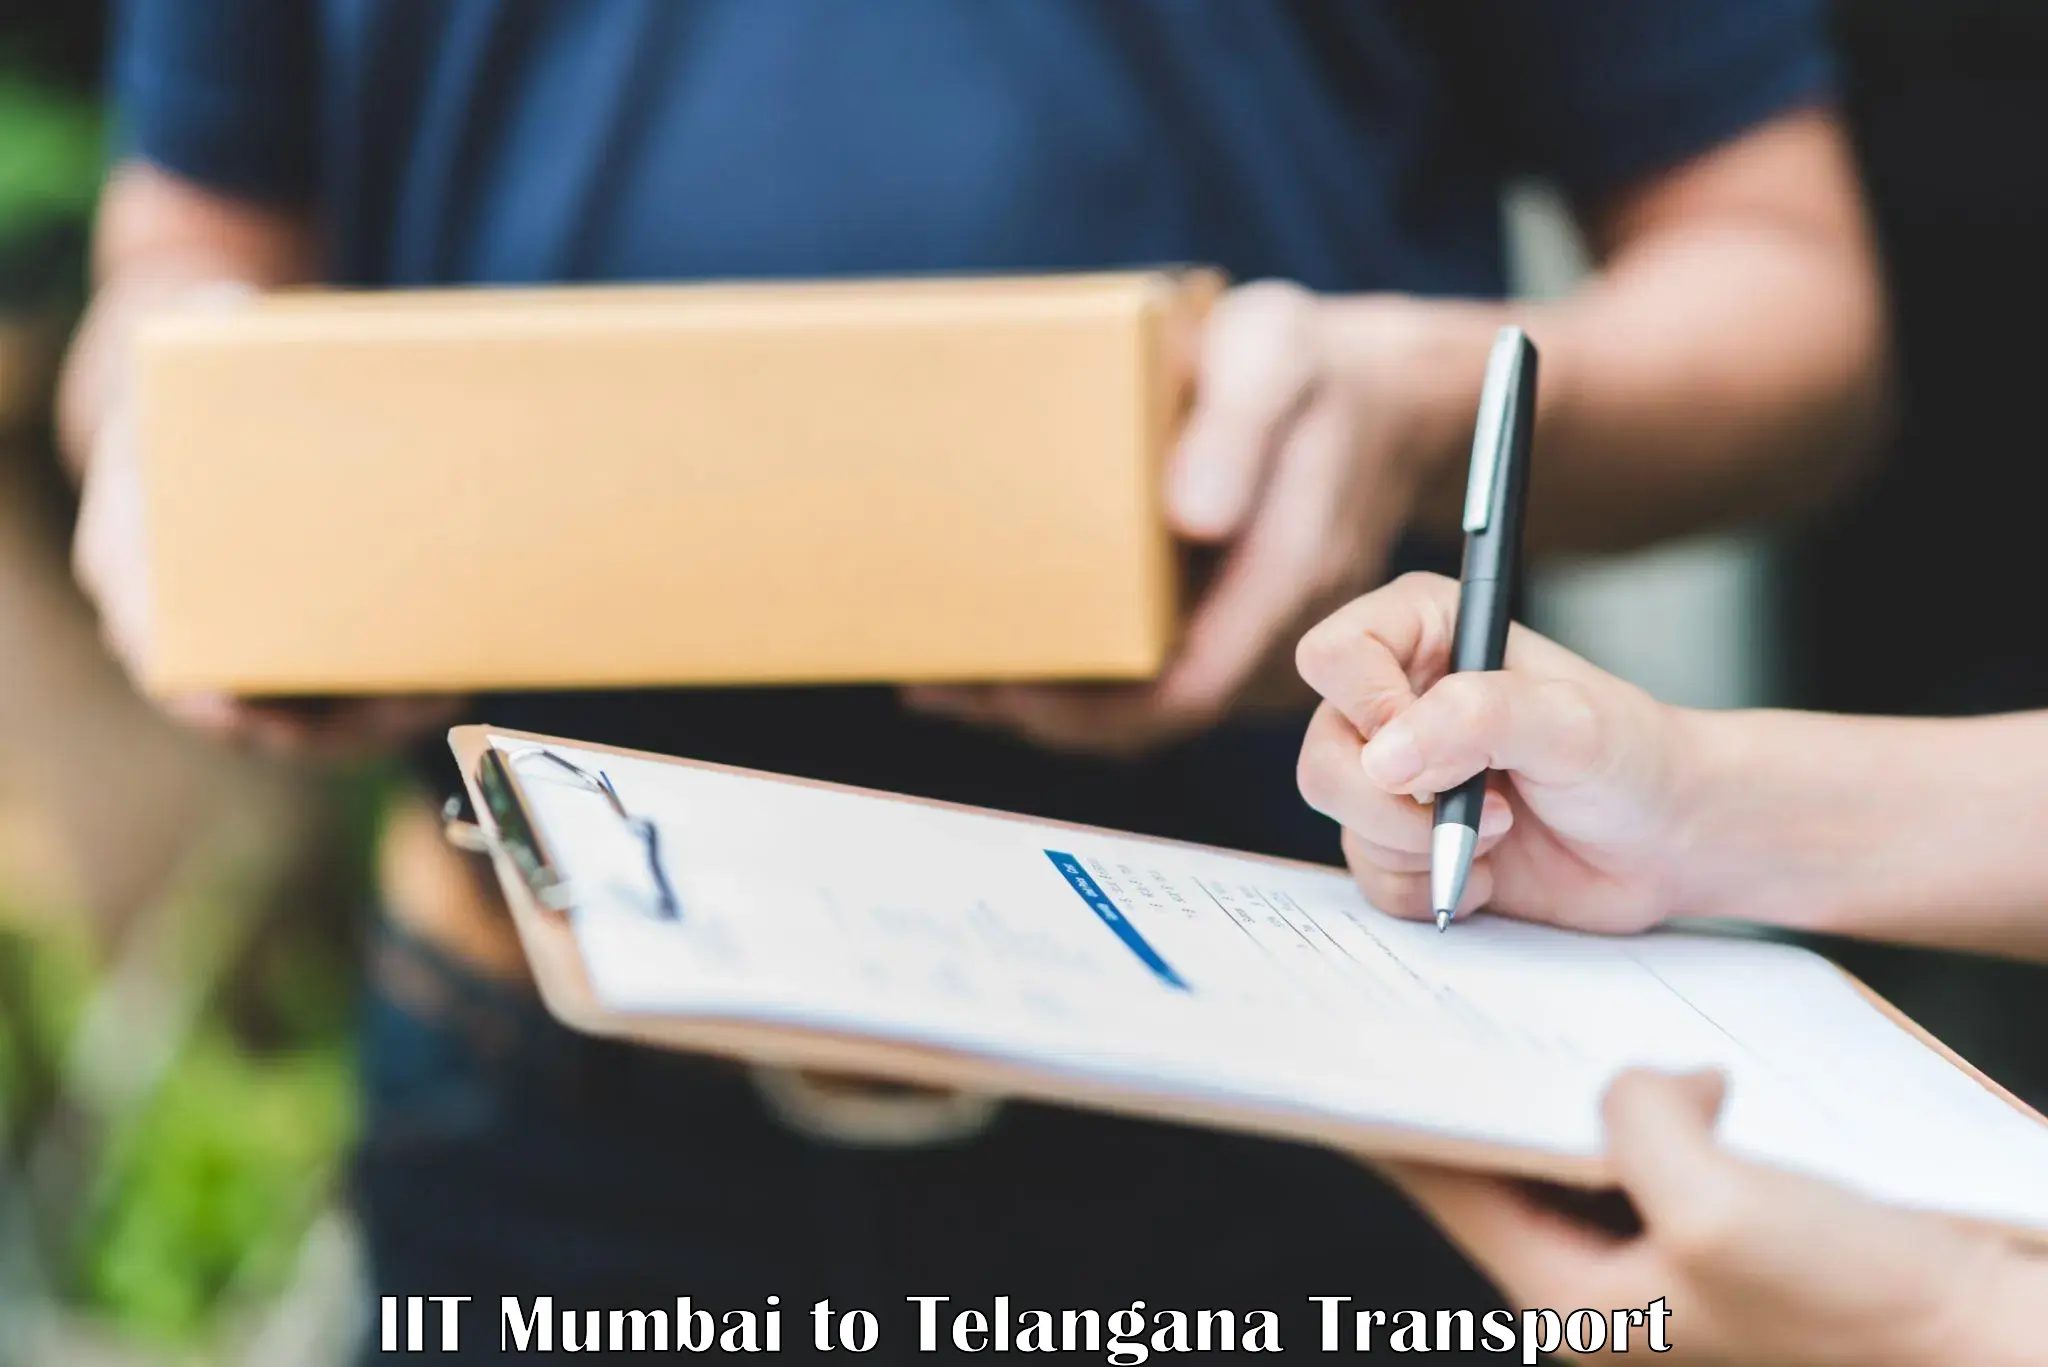 Delivery service IIT Mumbai to Telangana